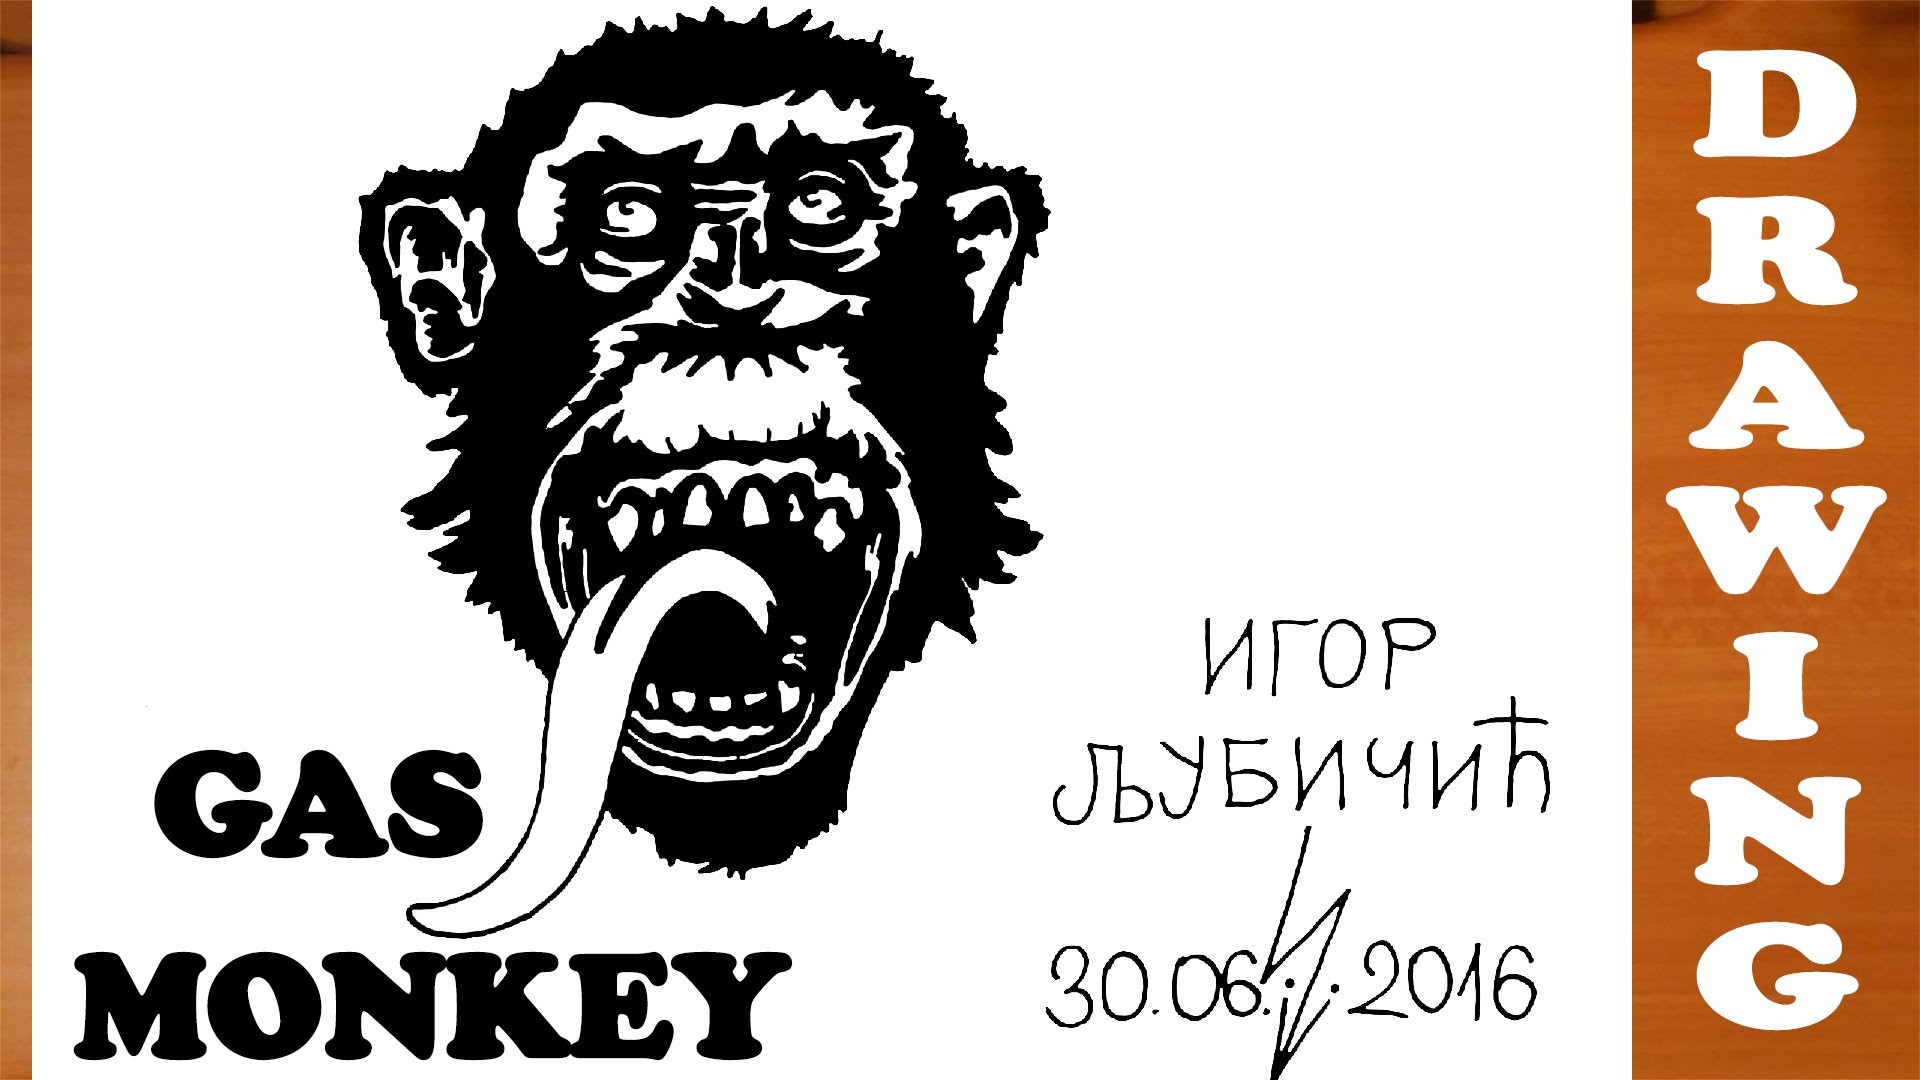 1920x1080 How to Draw a Chimpanzee Monkey Easy for Kids and color - Gas Monkey Garage  Logo | #MrUsegoodART - YouTube